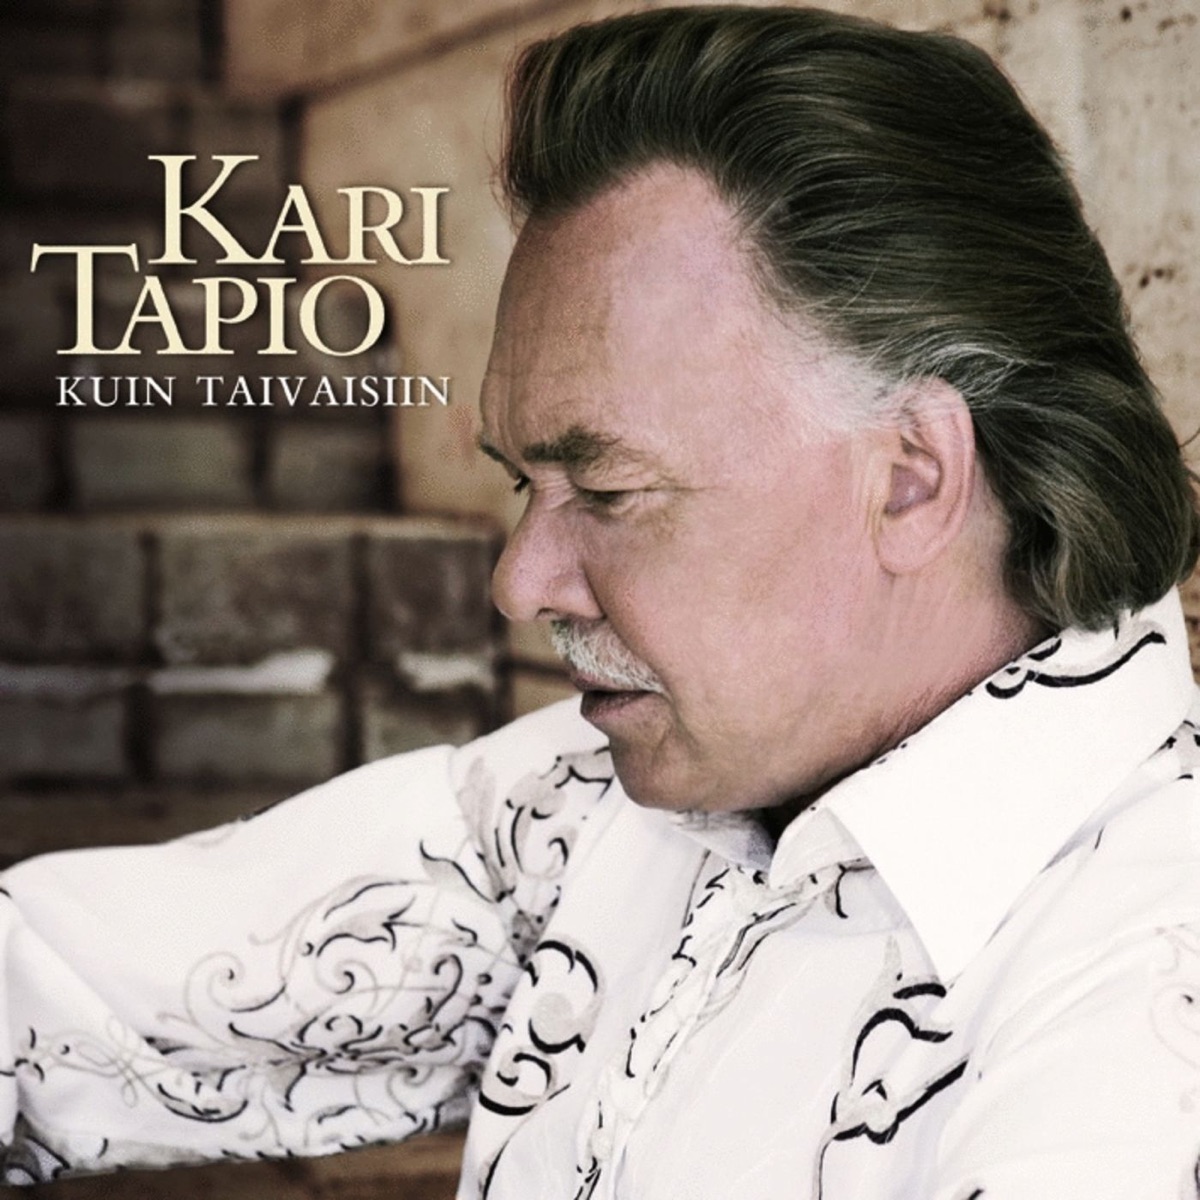 Sydämeni lyö by Kari Tapio on Apple Music